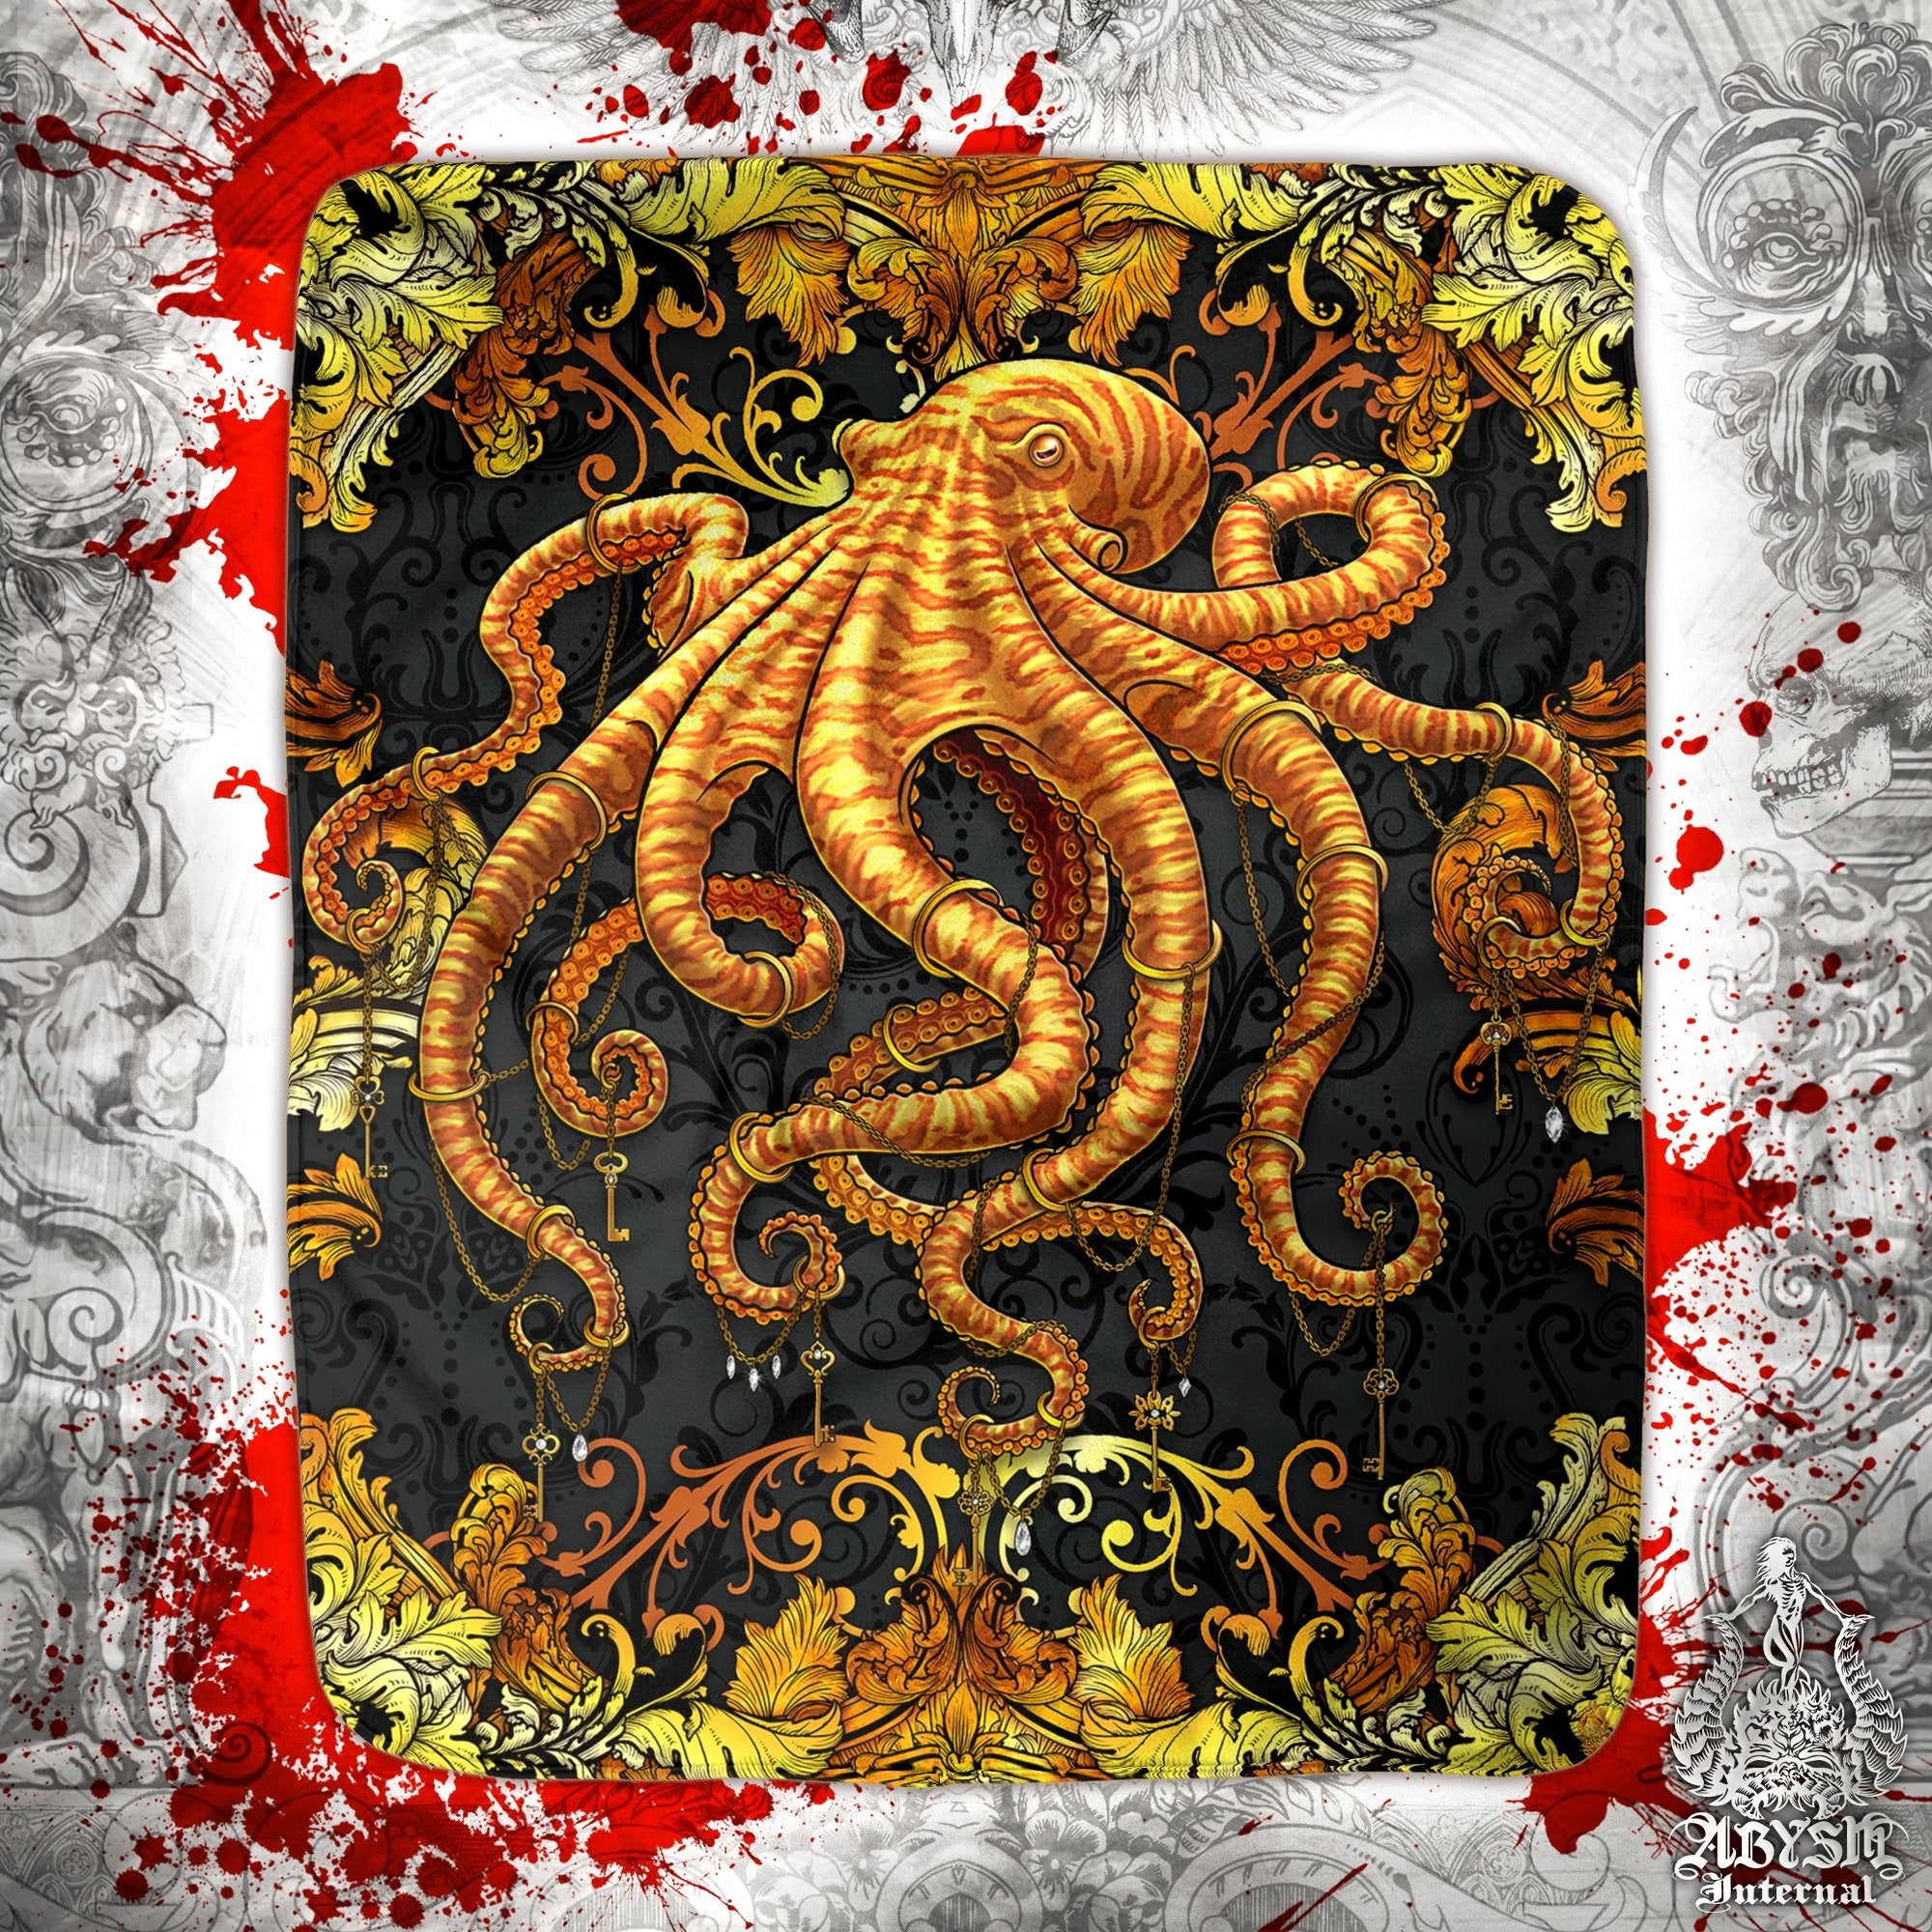 Octopus Throw Fleece Blanket, Beach Home Decor - Gold & Black - Abysm Internal